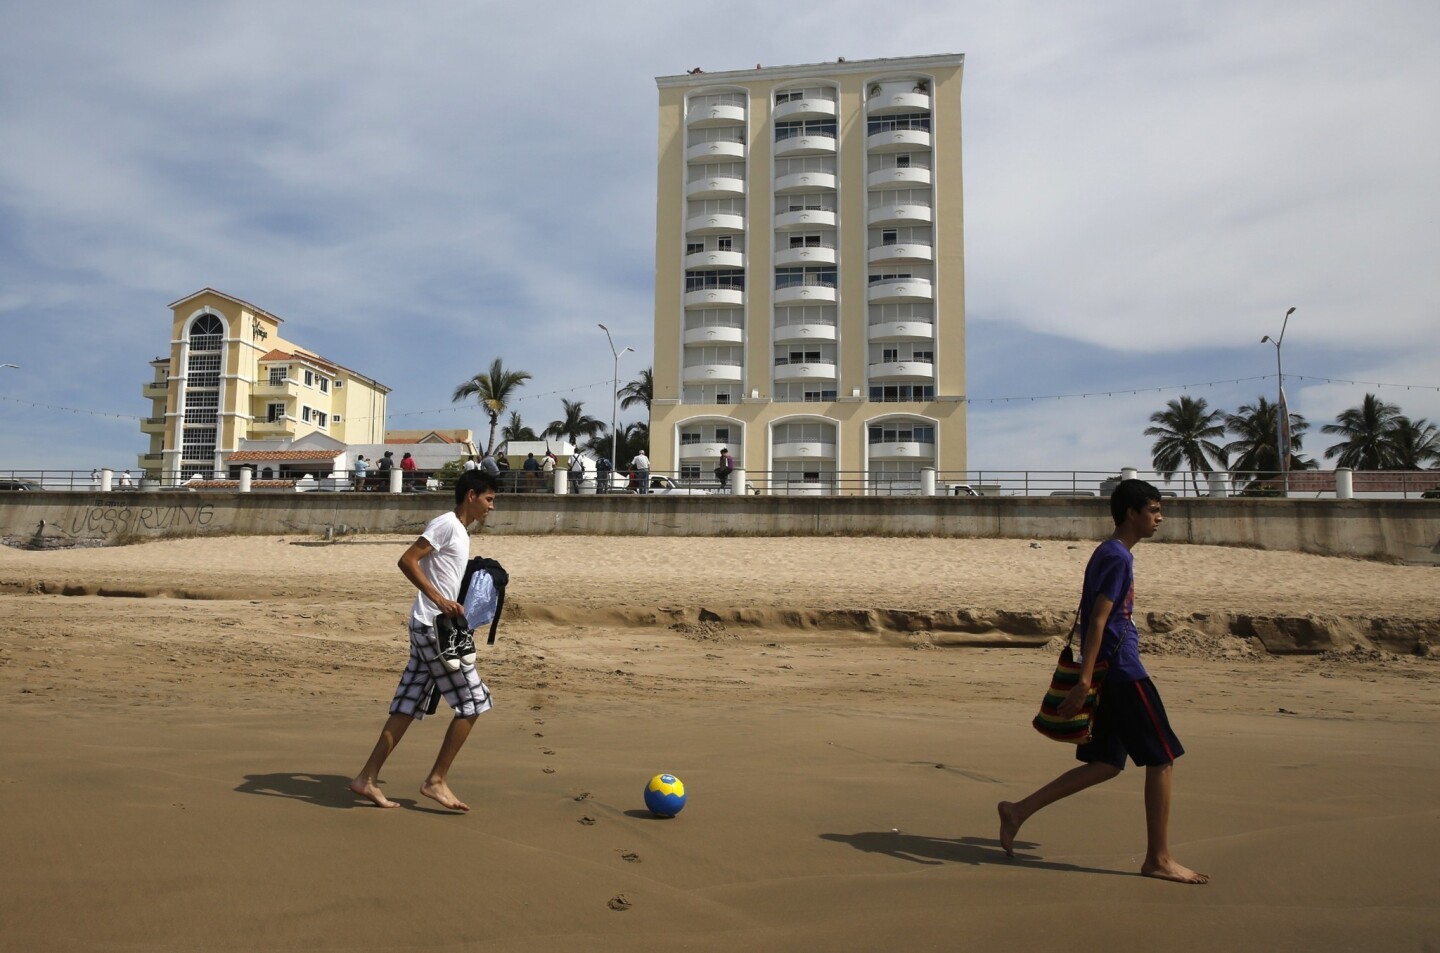 Locals play on the beach in front of the condominium complex where Sinaloa cartel leader Joaquin "El Chapo" Guzman was captured.